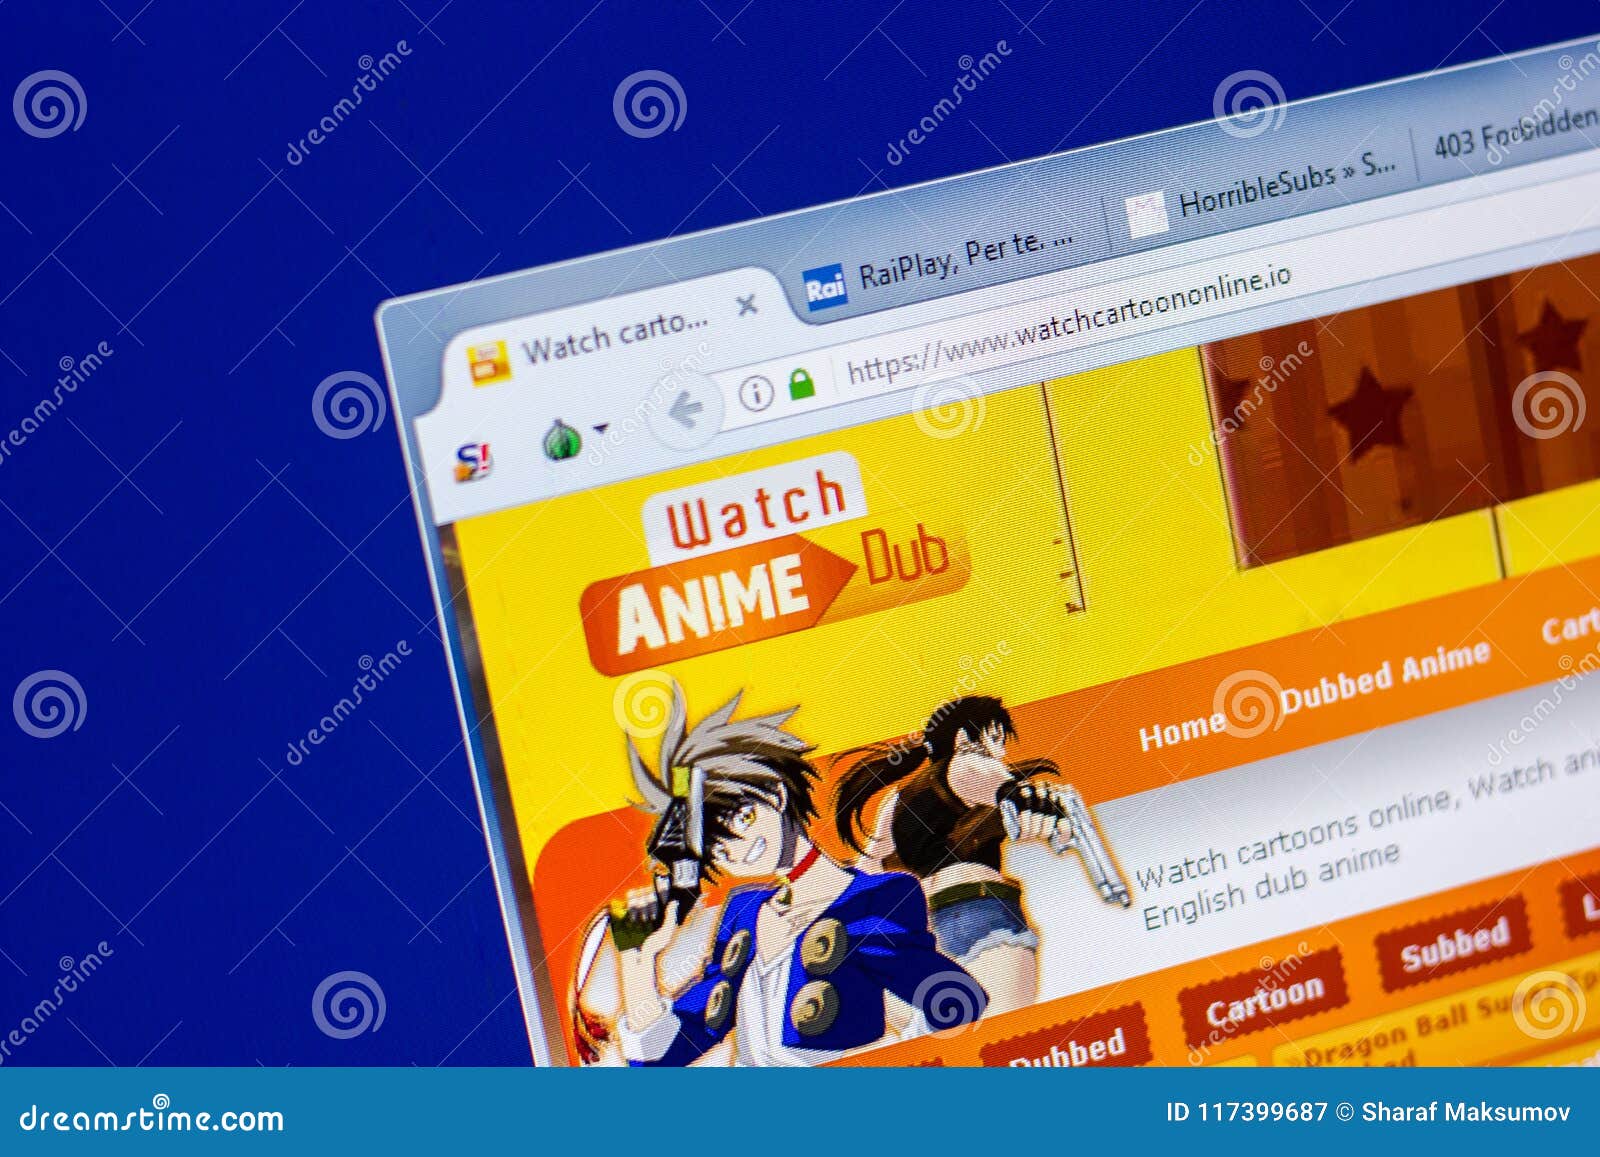 ahmad natour recommends Watch Cartoon Online Dragon Ball